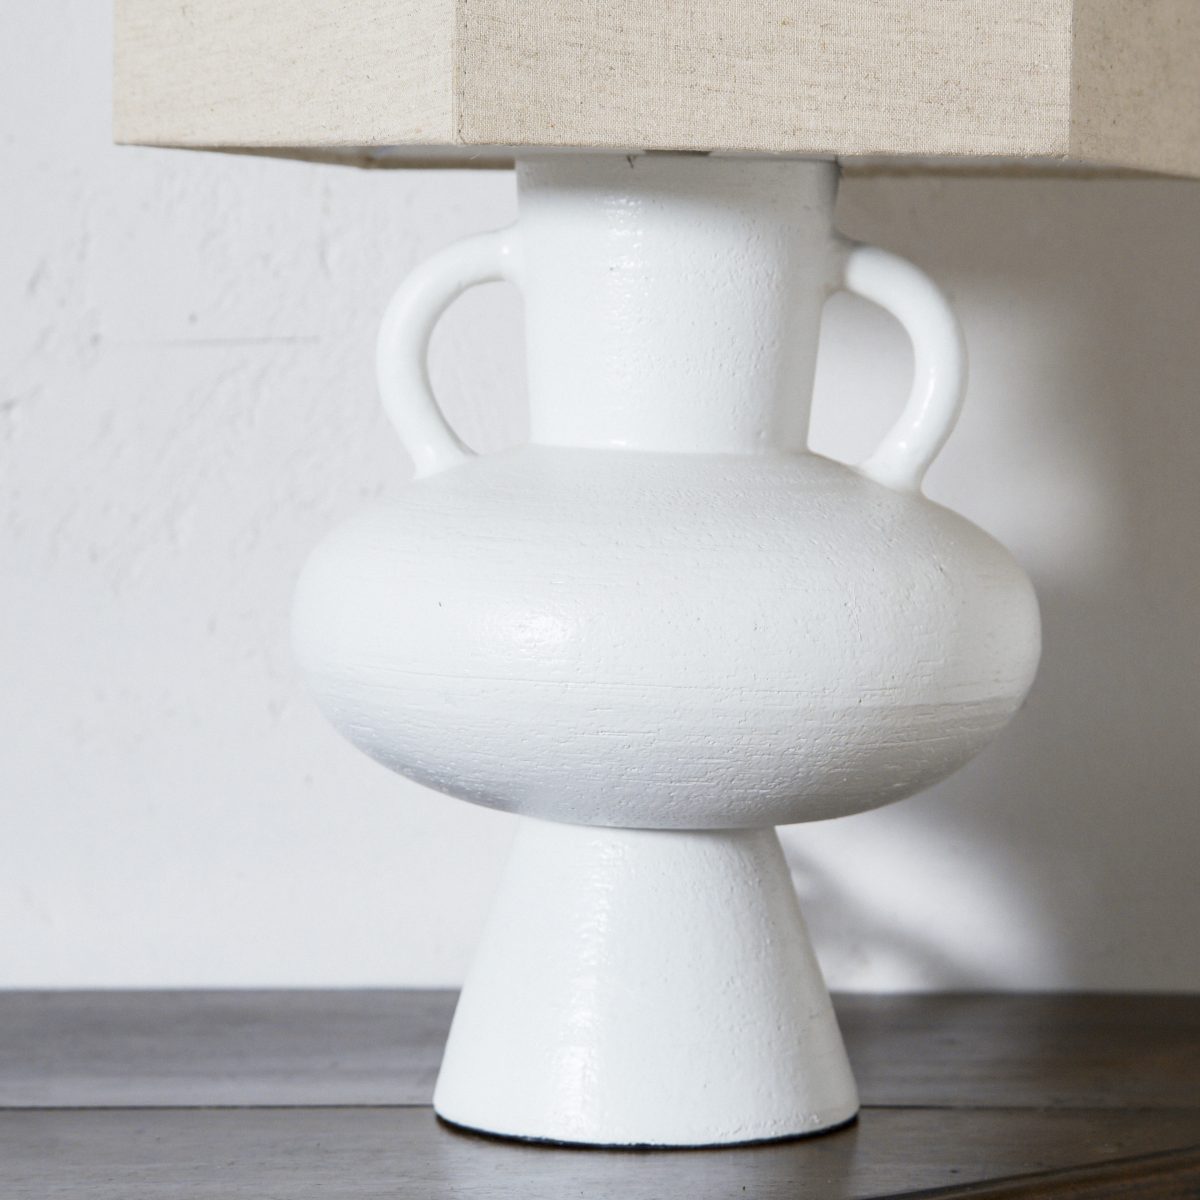 Lámpara de mesa de cerámica blanca